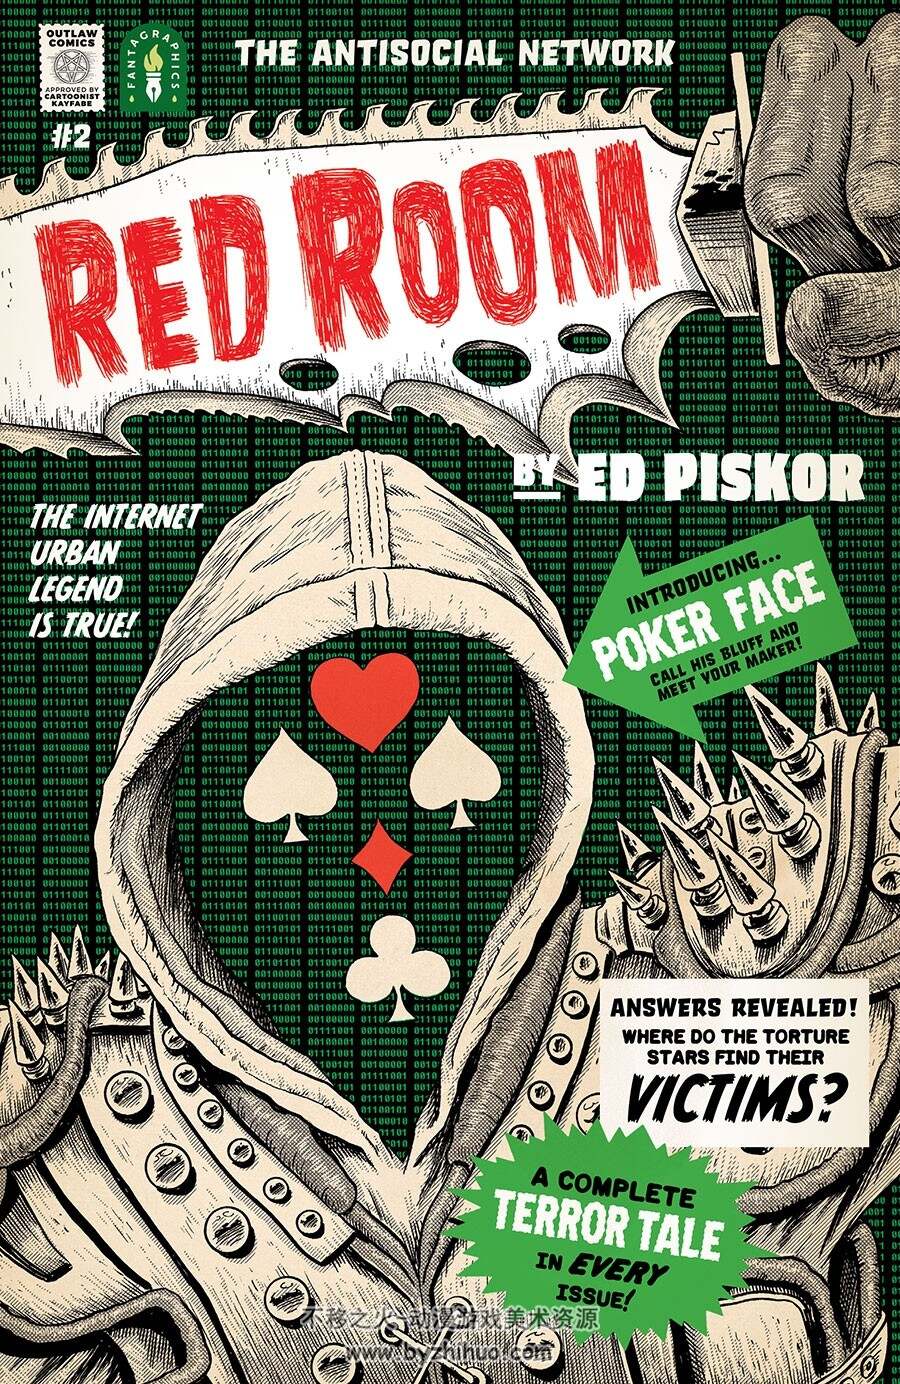 Red Room 01-04 英字 百度网盘下载 358 MB